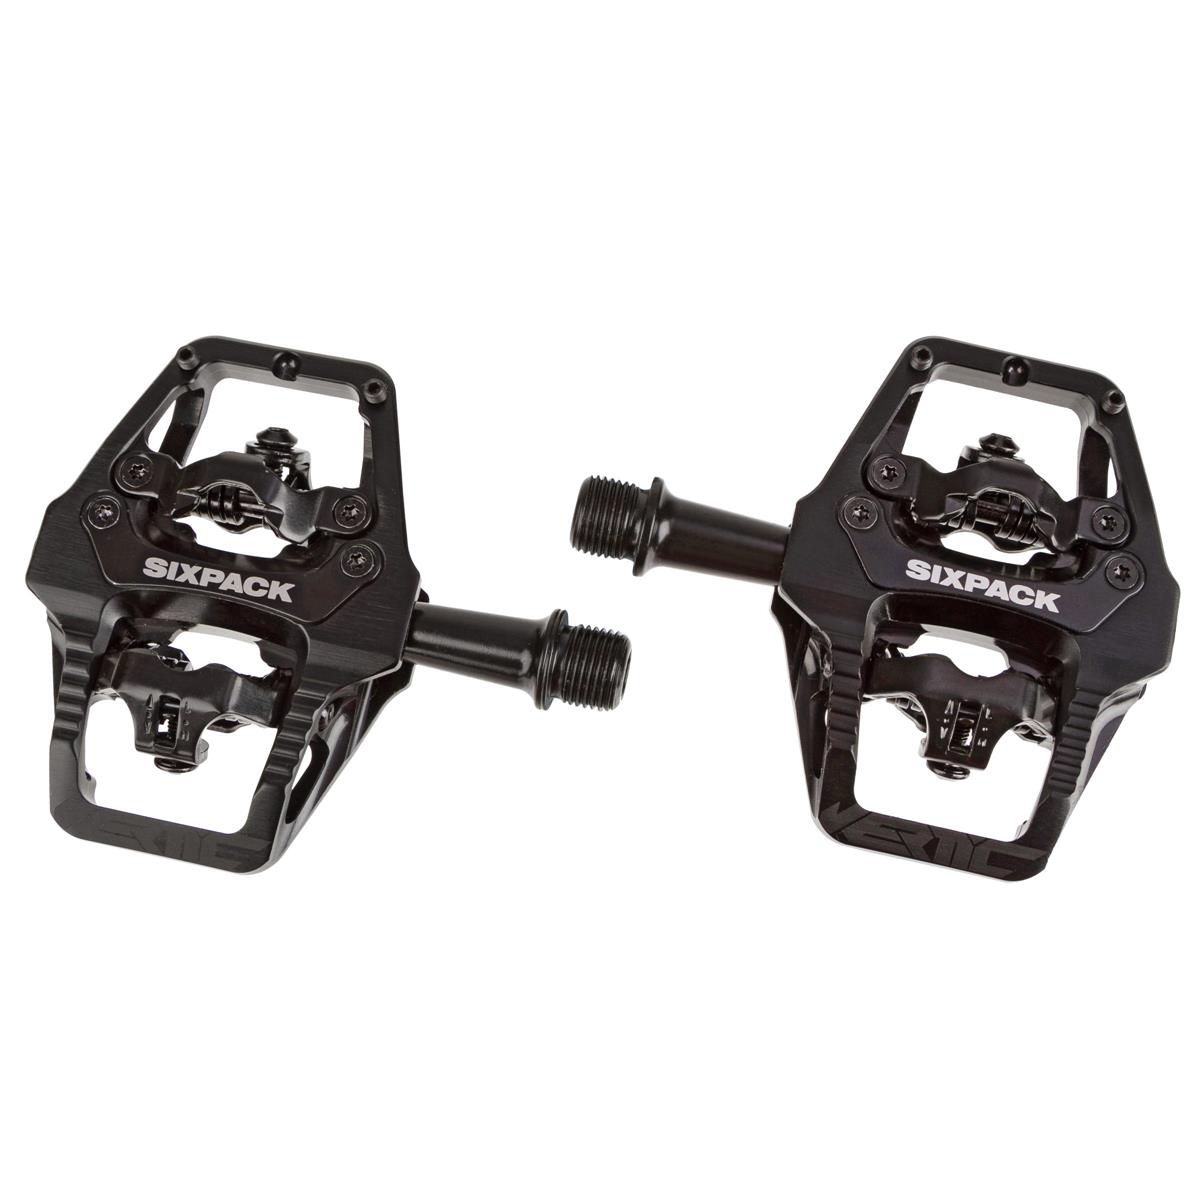 Sixpack Pedali Vertic Black, SPD compatible, 8° Float, Q-Factor: 59 mm, 1 Pair